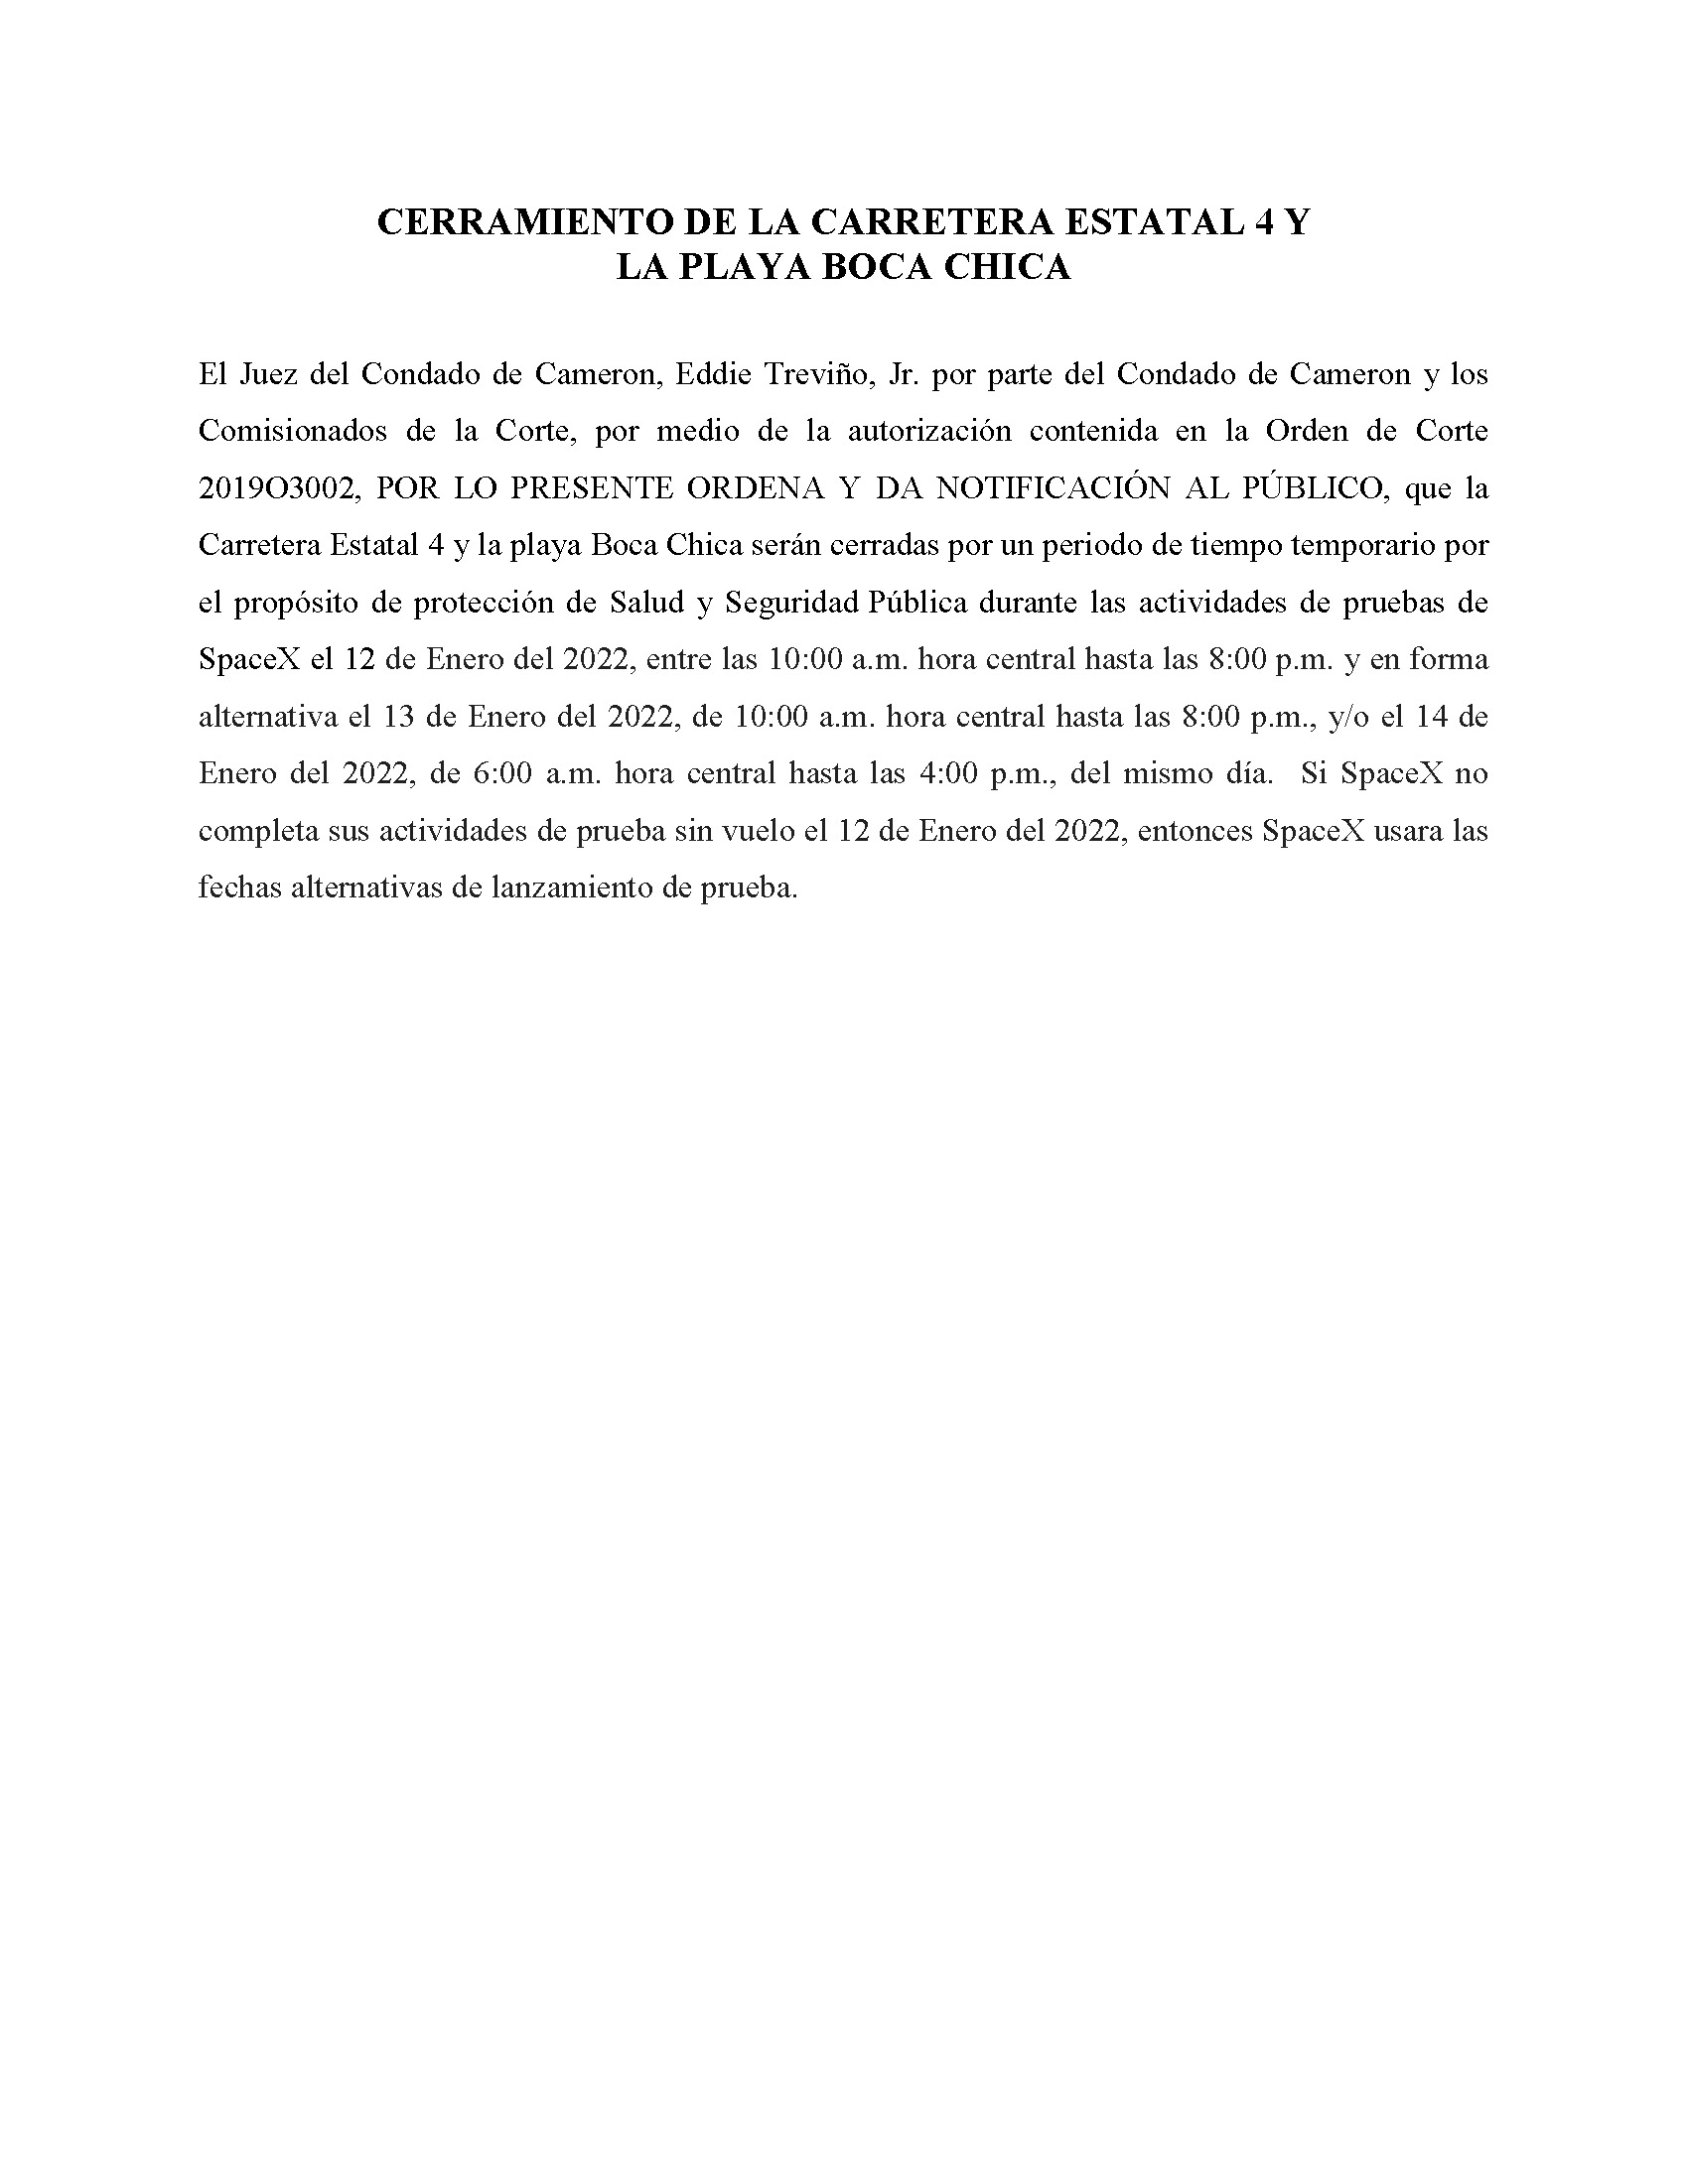 ORDER.CLOSURE OF HIGHWAY 4 Y LA PLAYA BOCA CHICA.SPANISH.01.12.2022